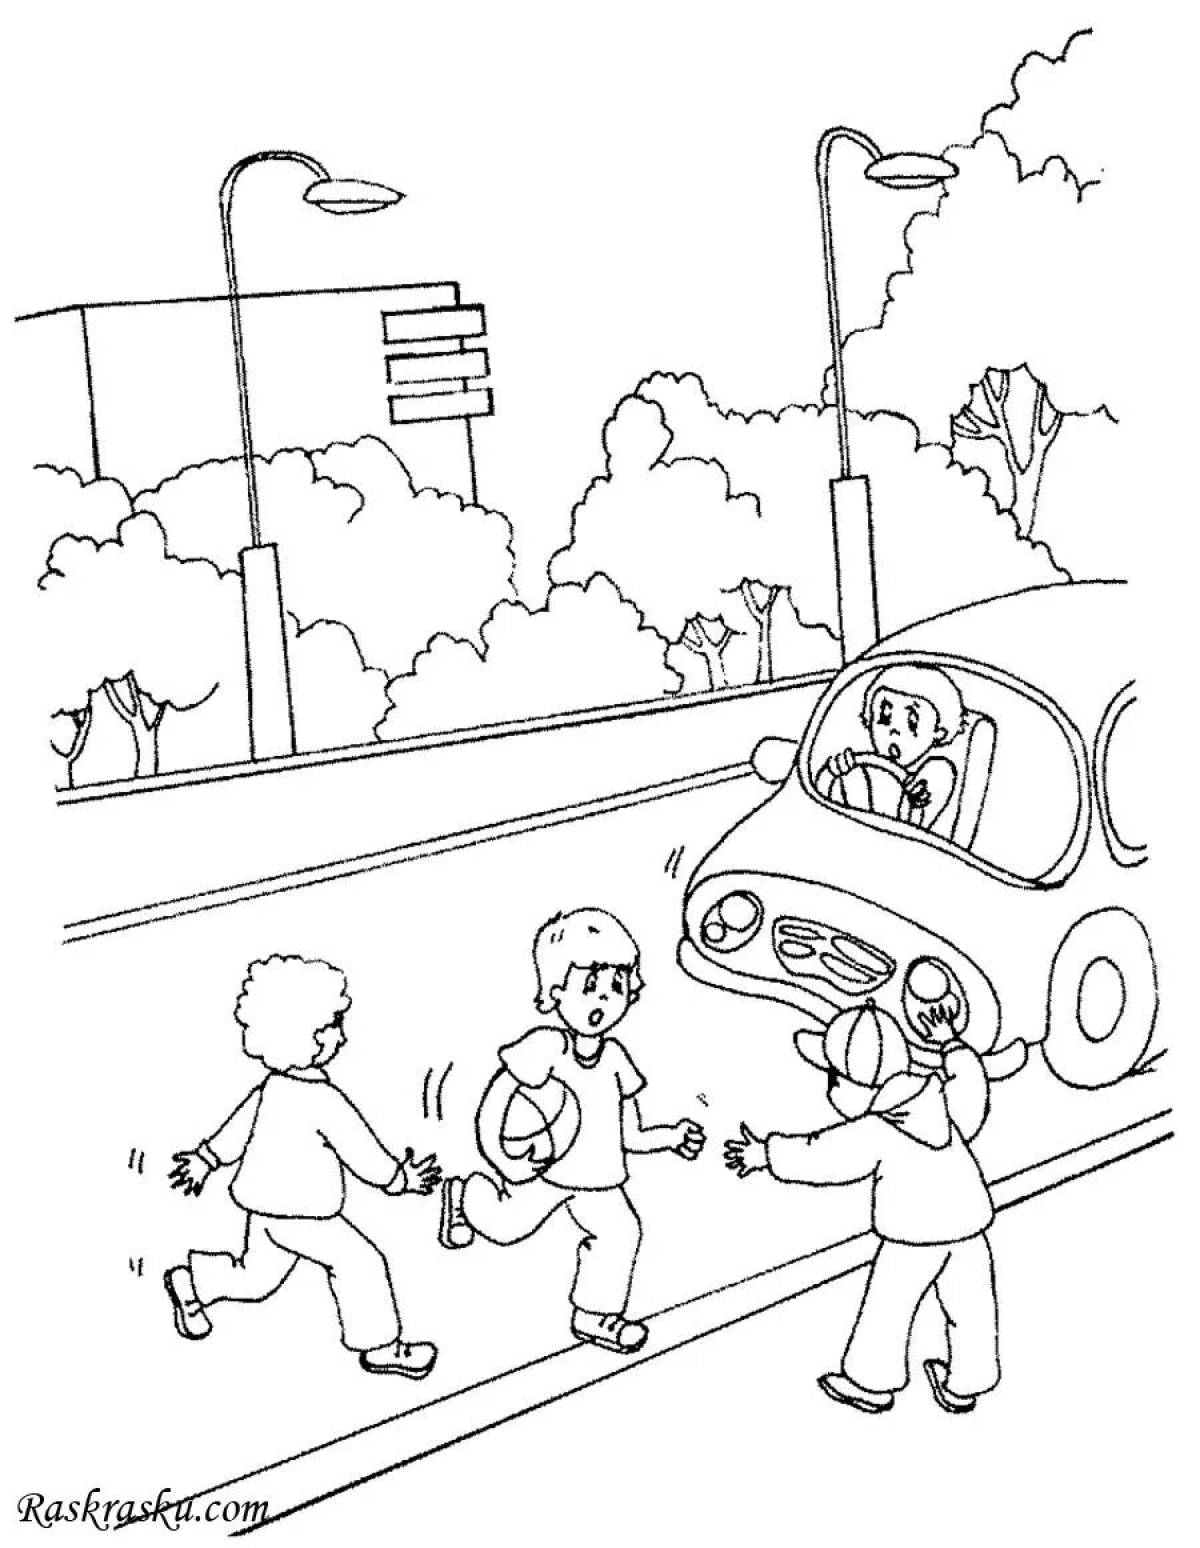 Road safety for children #7